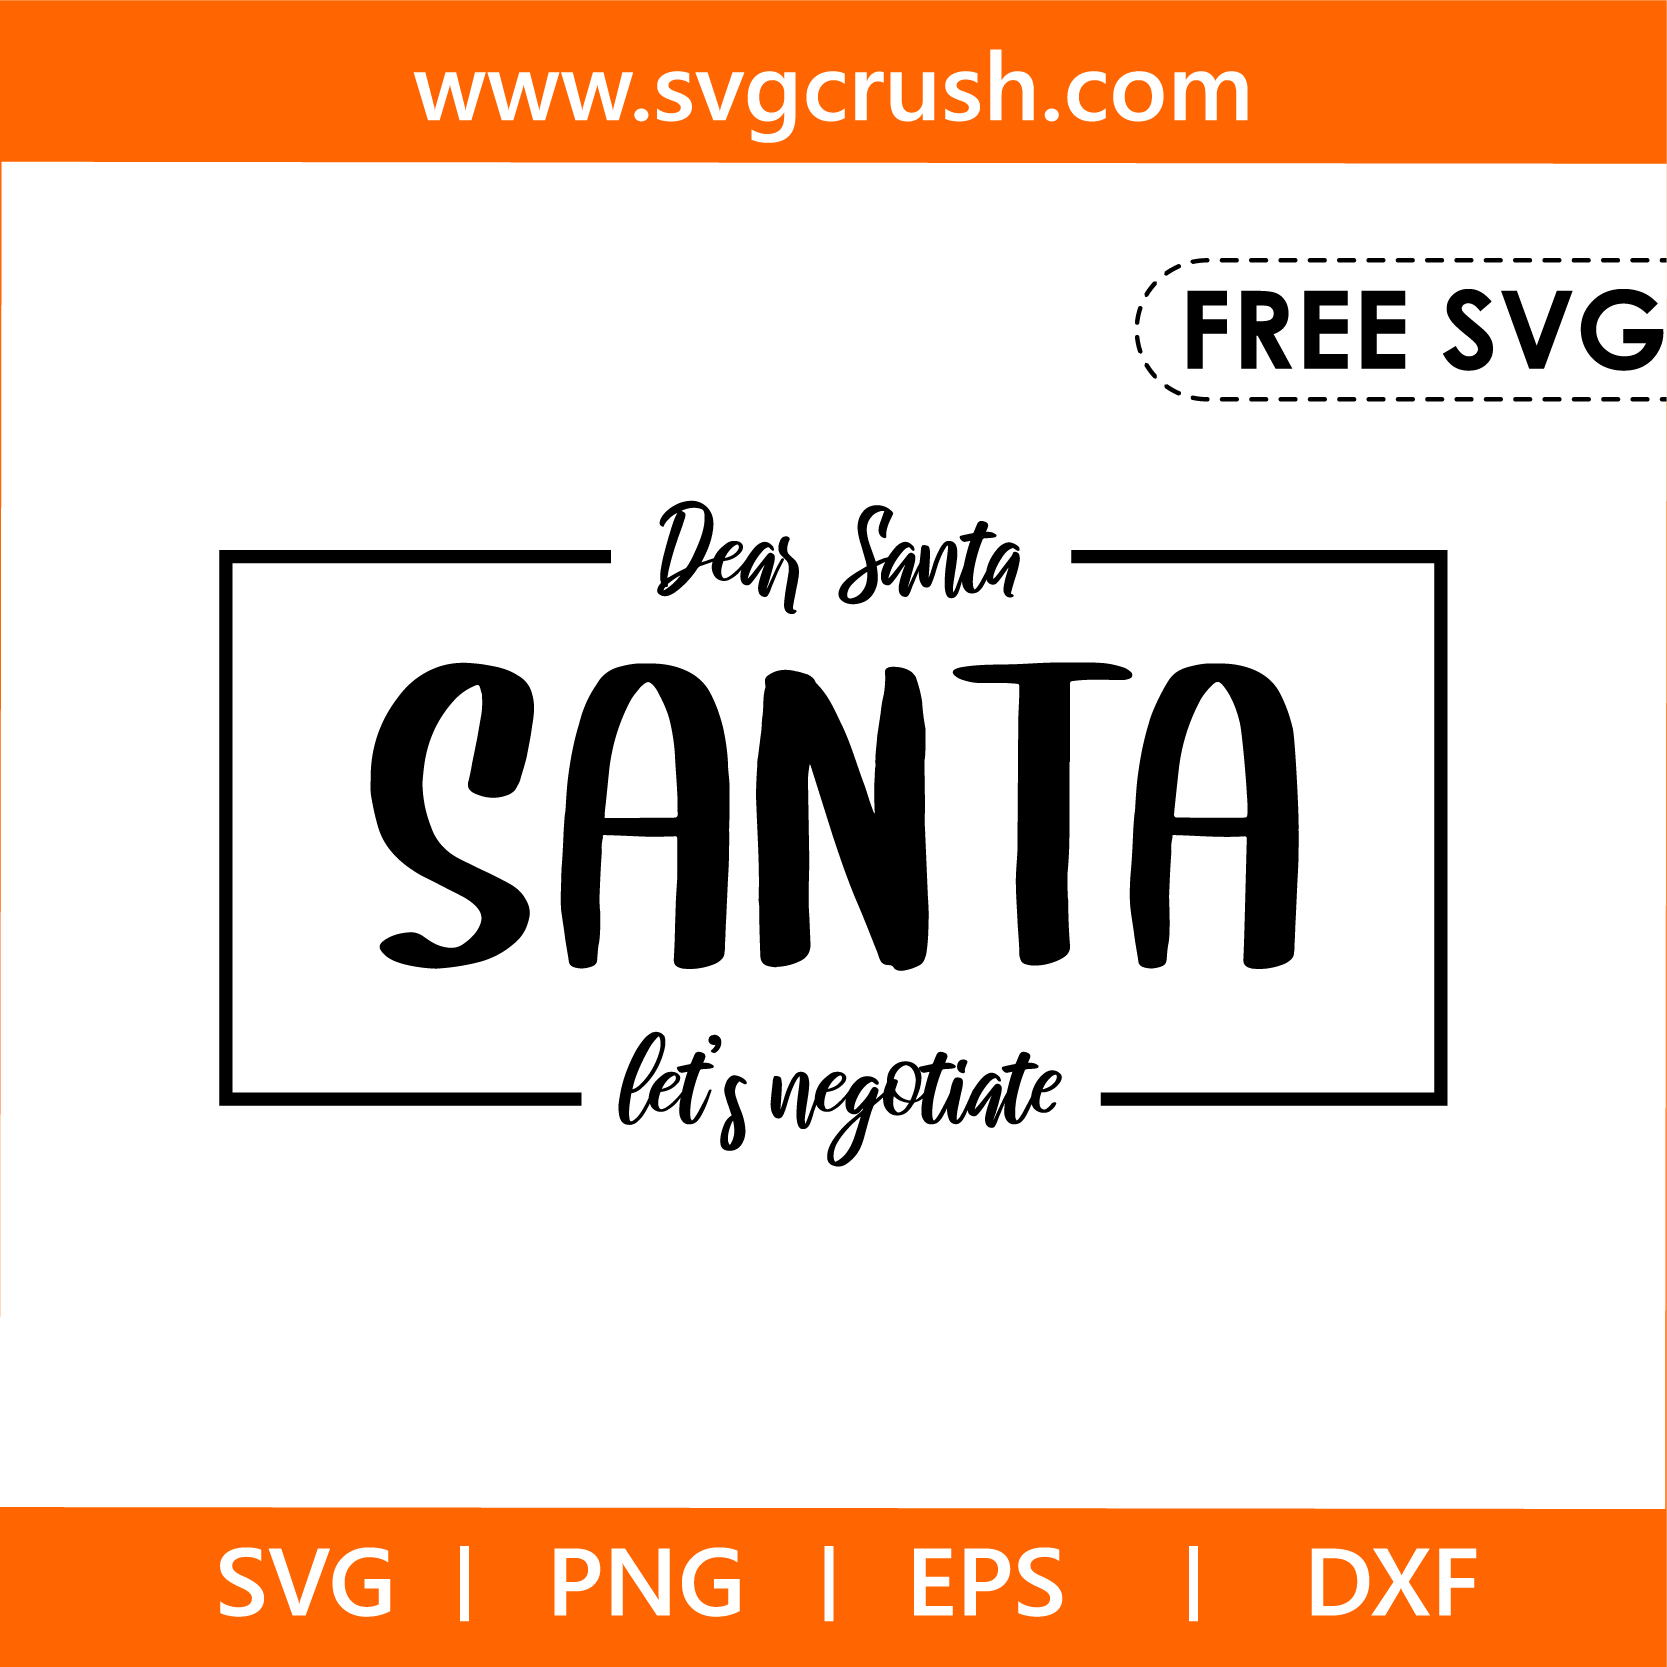 free dear-santa-lets-negotiate-005 svg